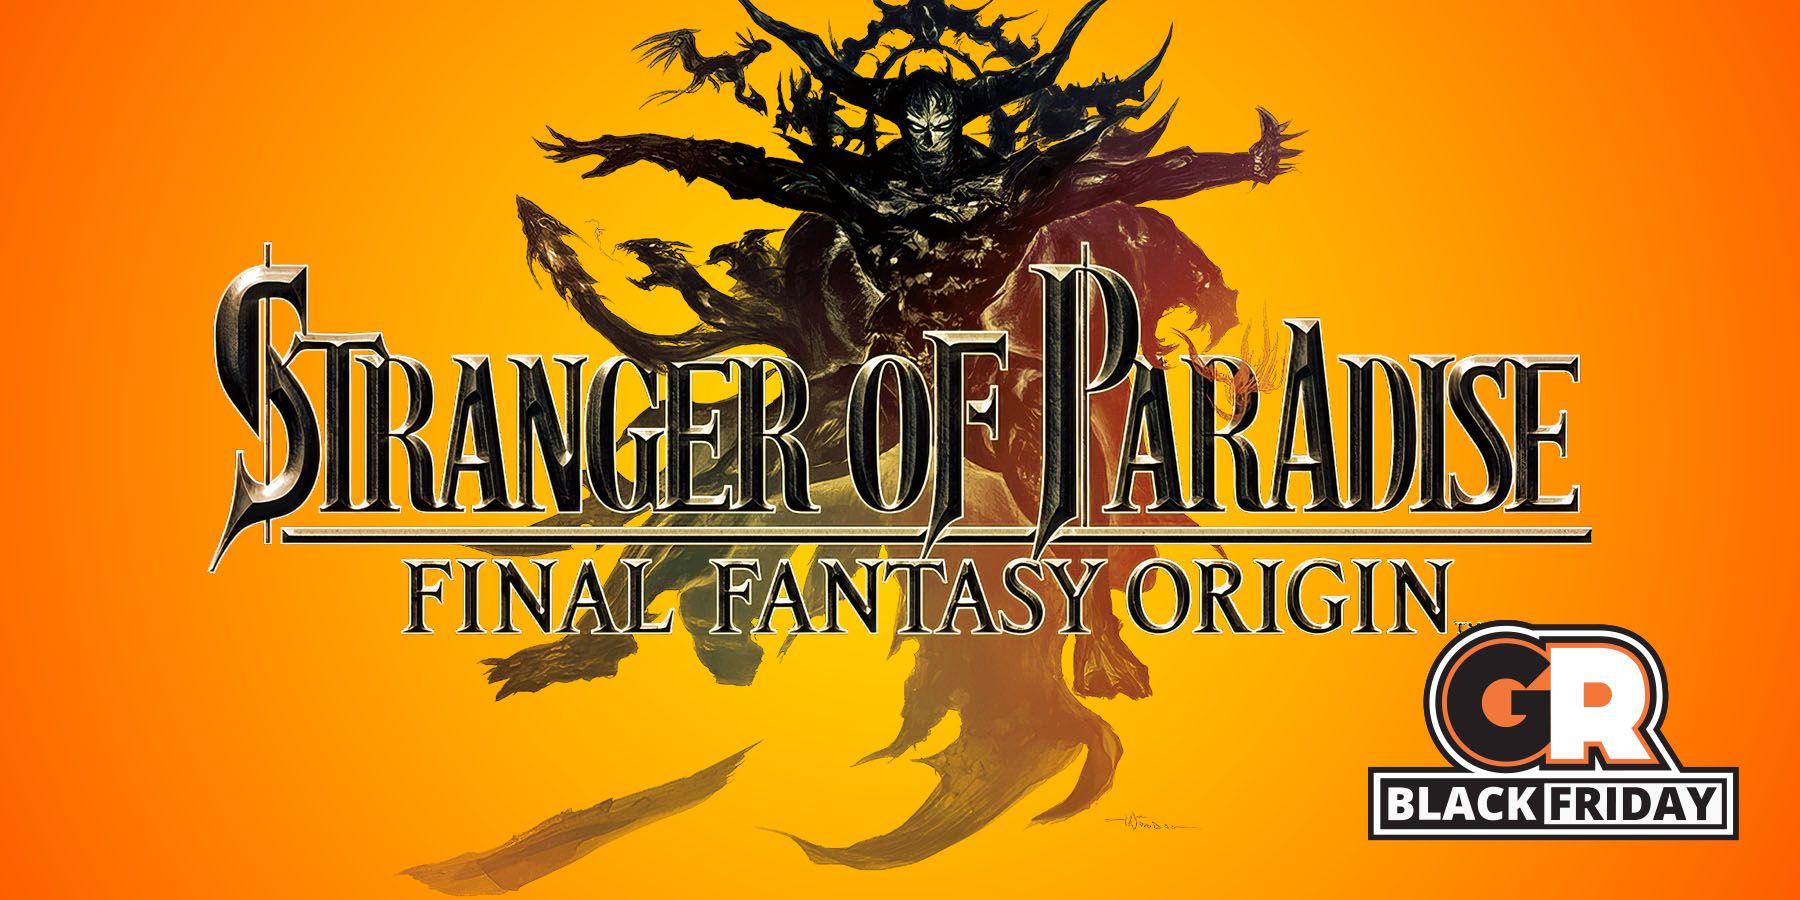 stranger of paradise final fantasy origin ps4 ps5 xbox gamerant amazon black friday deals feature